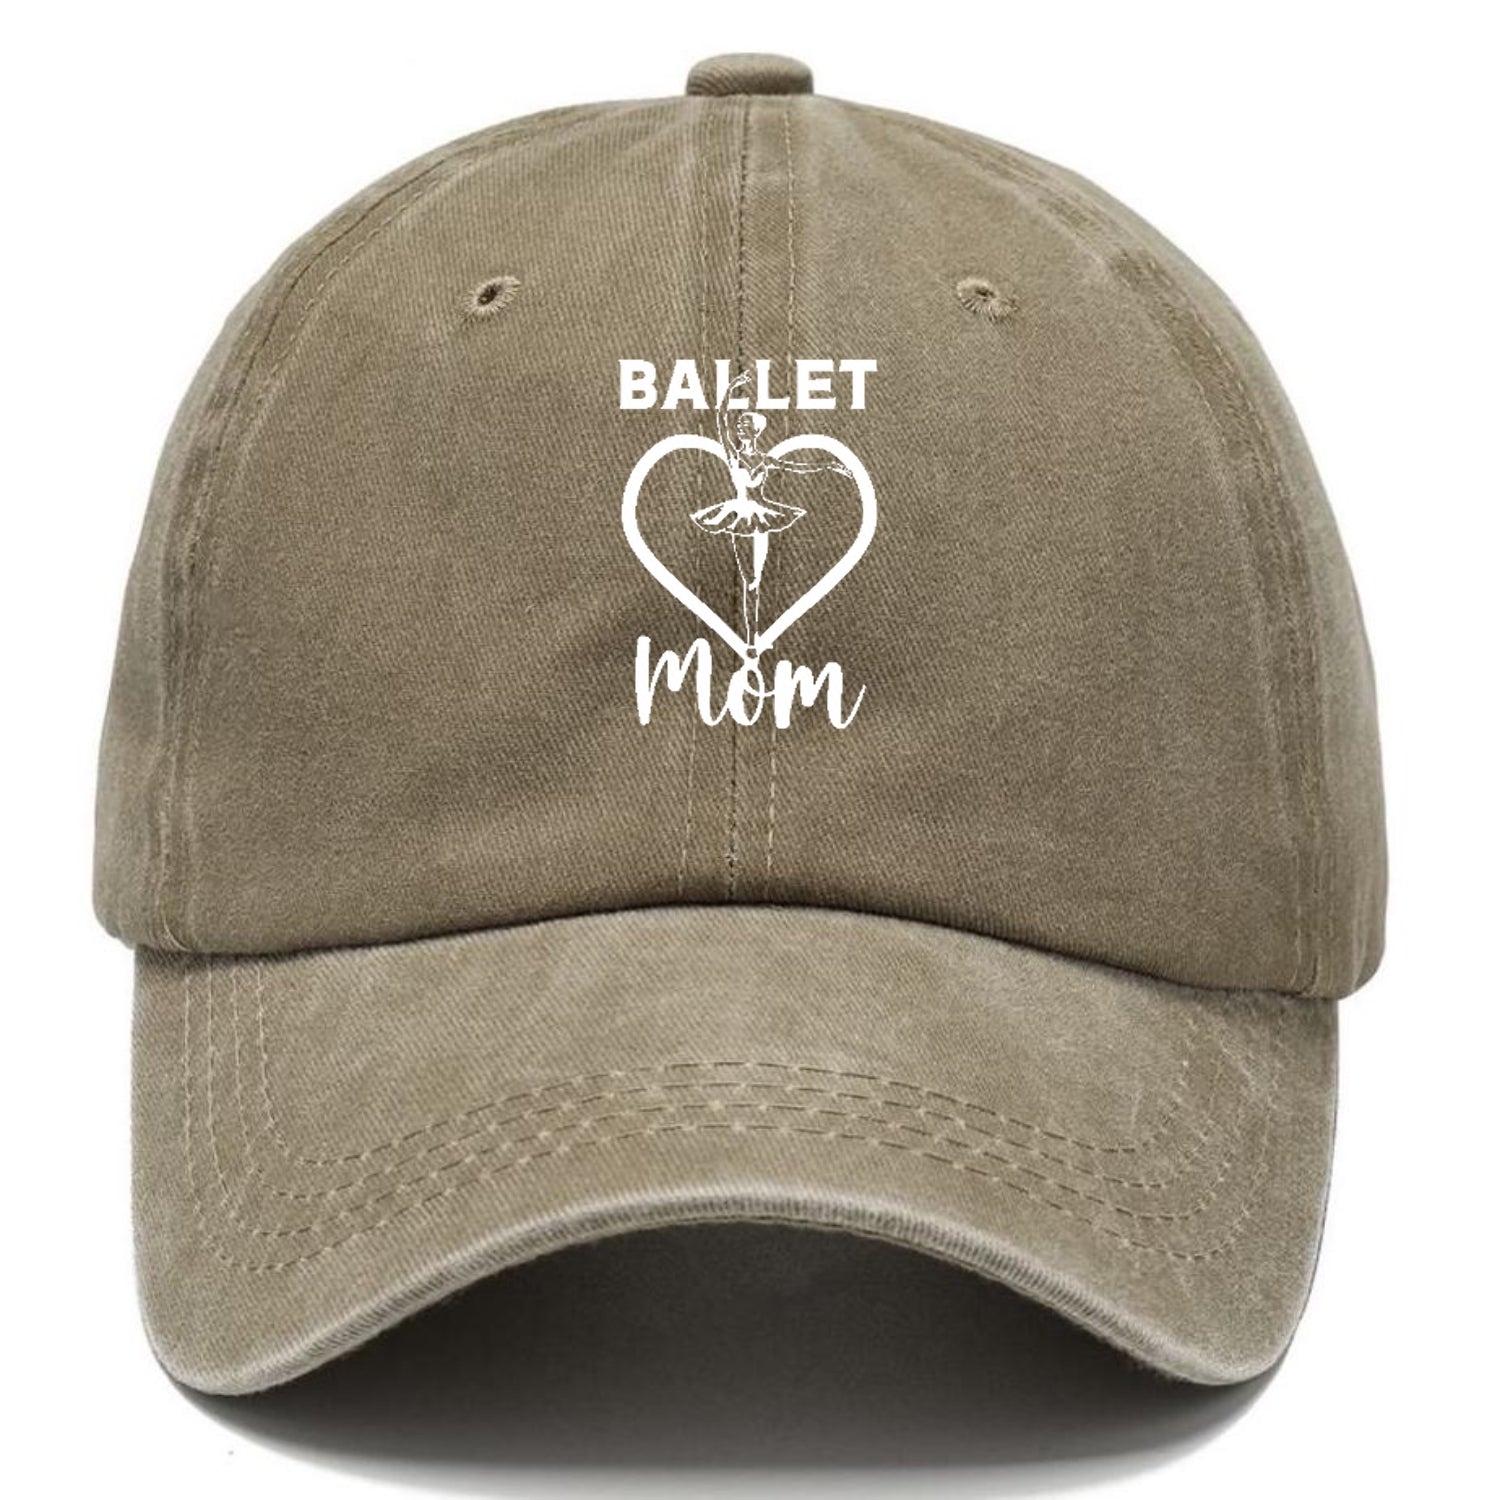 ballet mom Hat